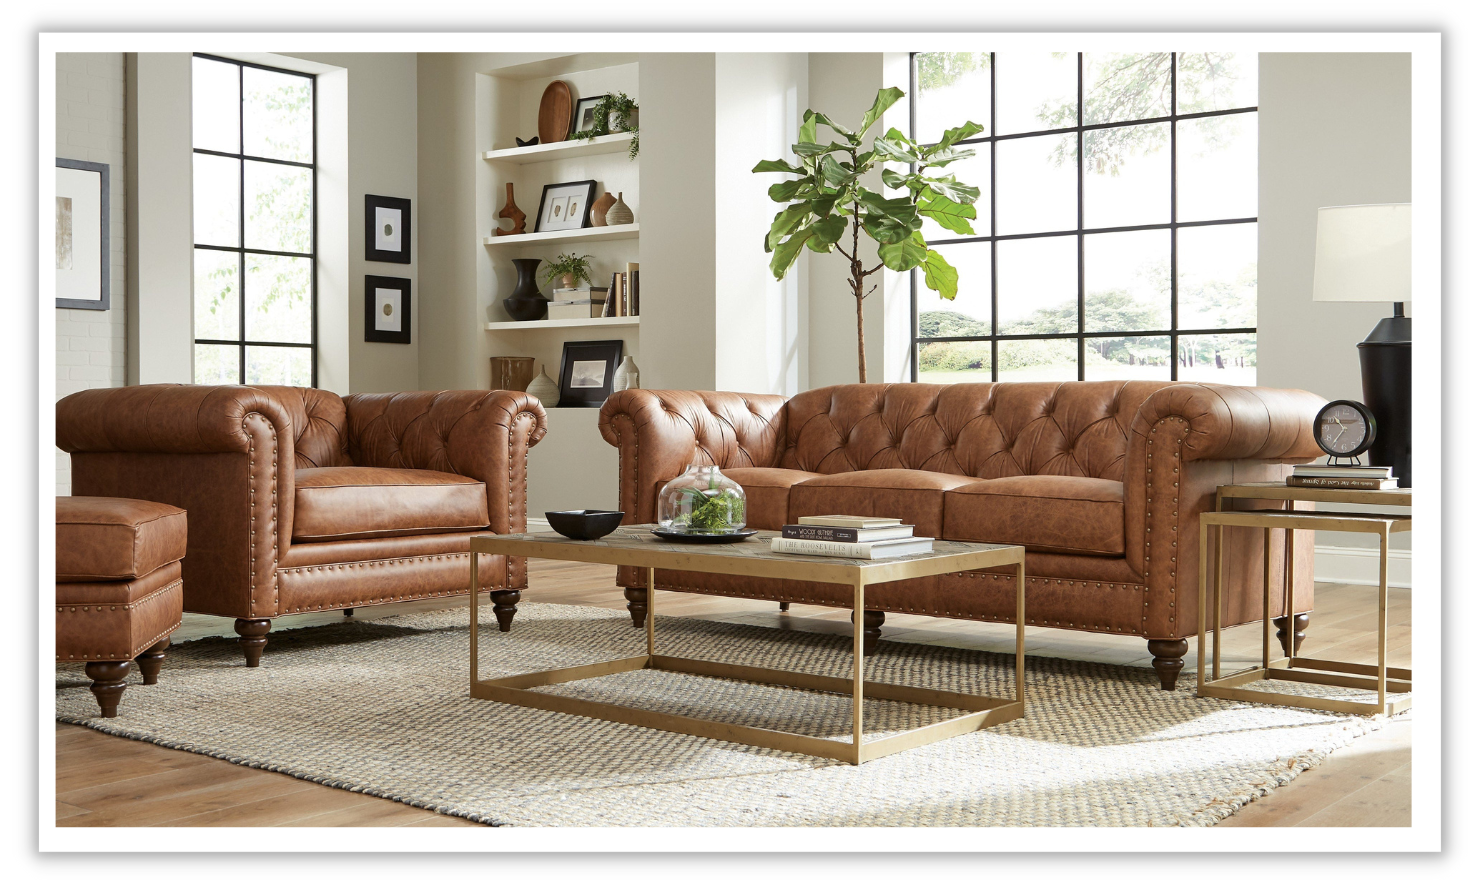 Winslow Leather Sofa Jennifer Furniture